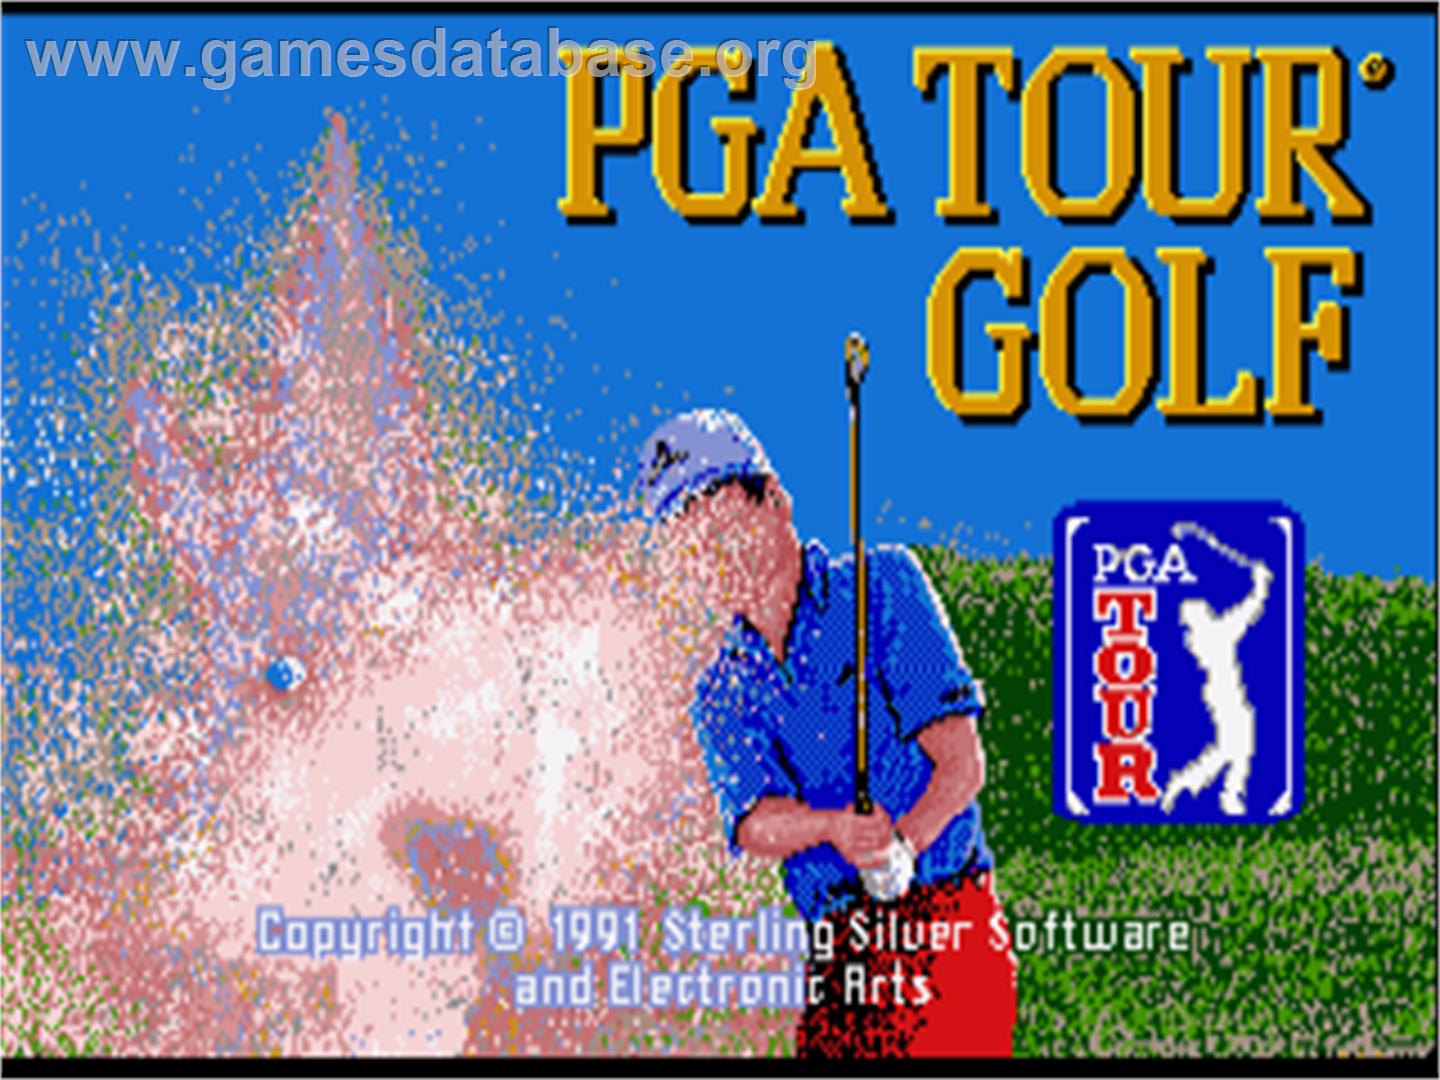 PGA Tour Golf - Commodore Amiga - Artwork - Title Screen